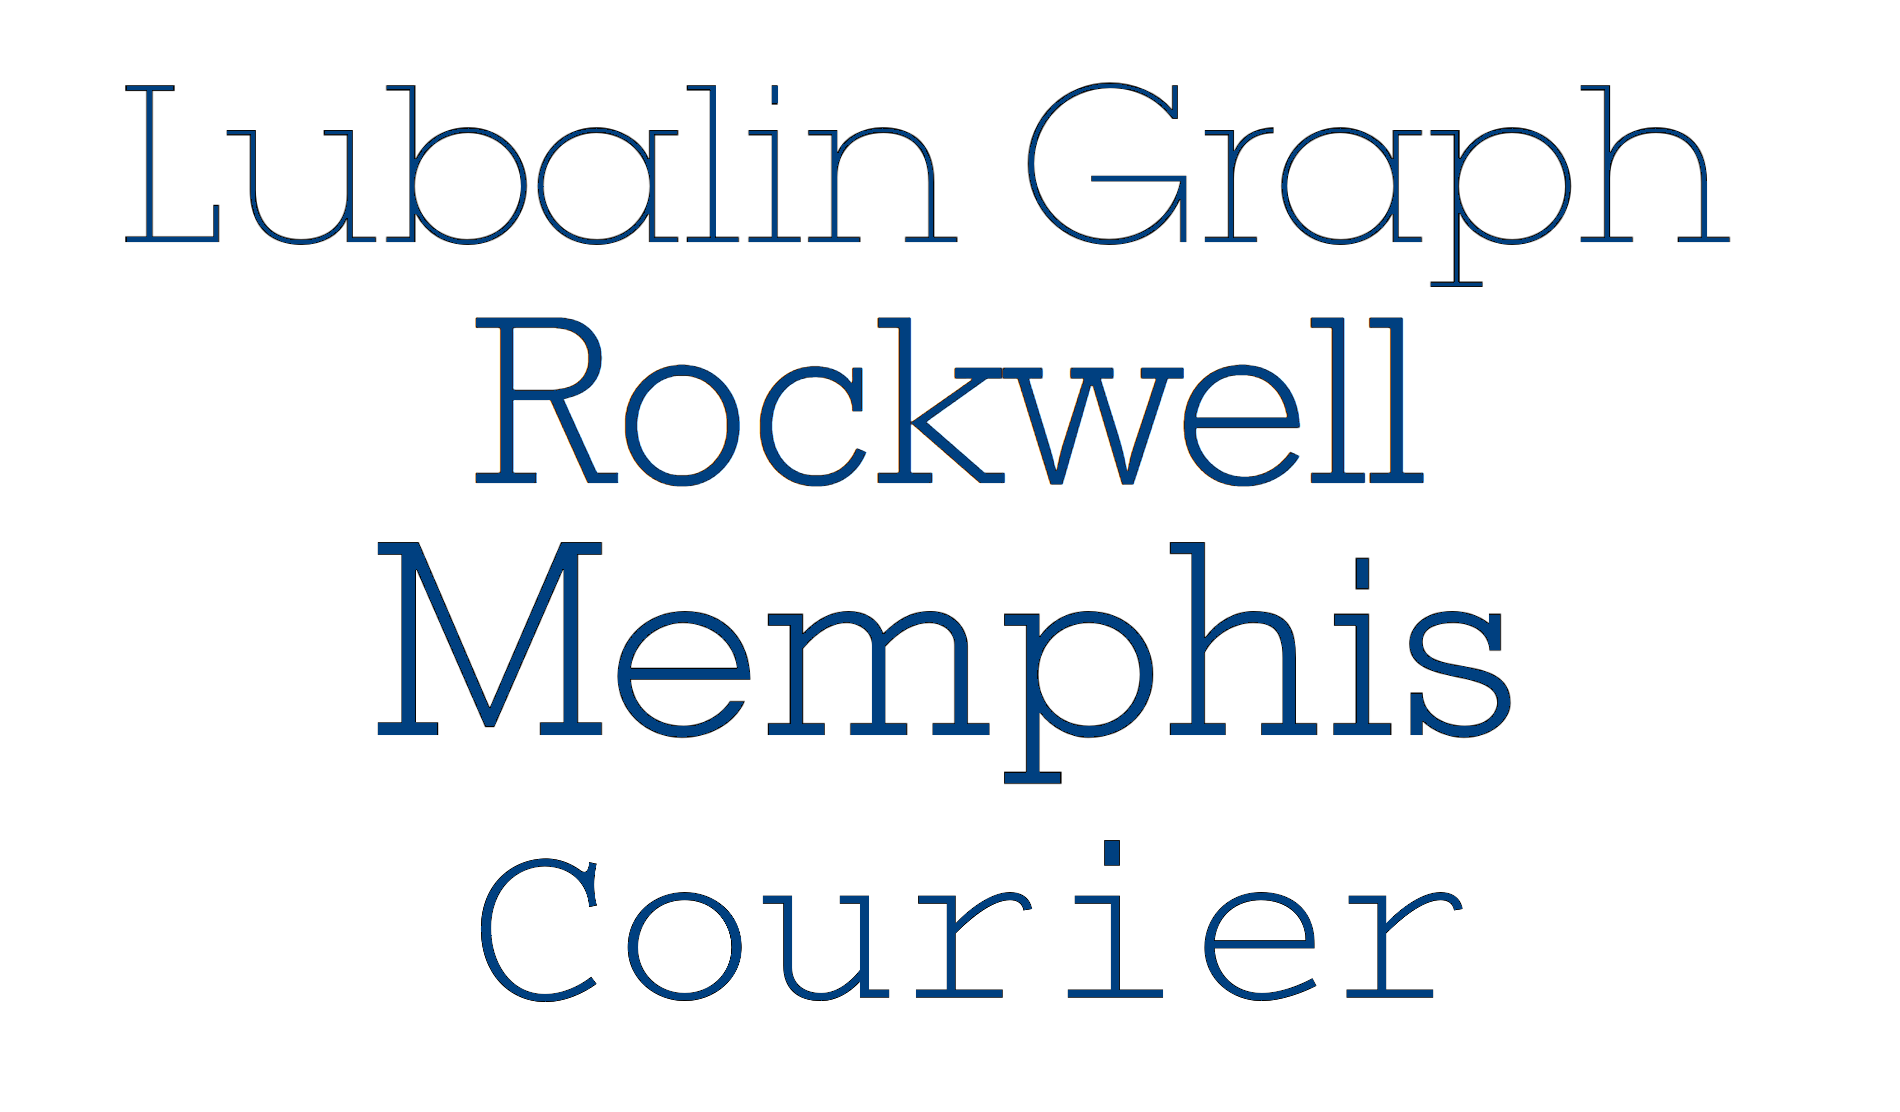 Examples of slab serif fonts